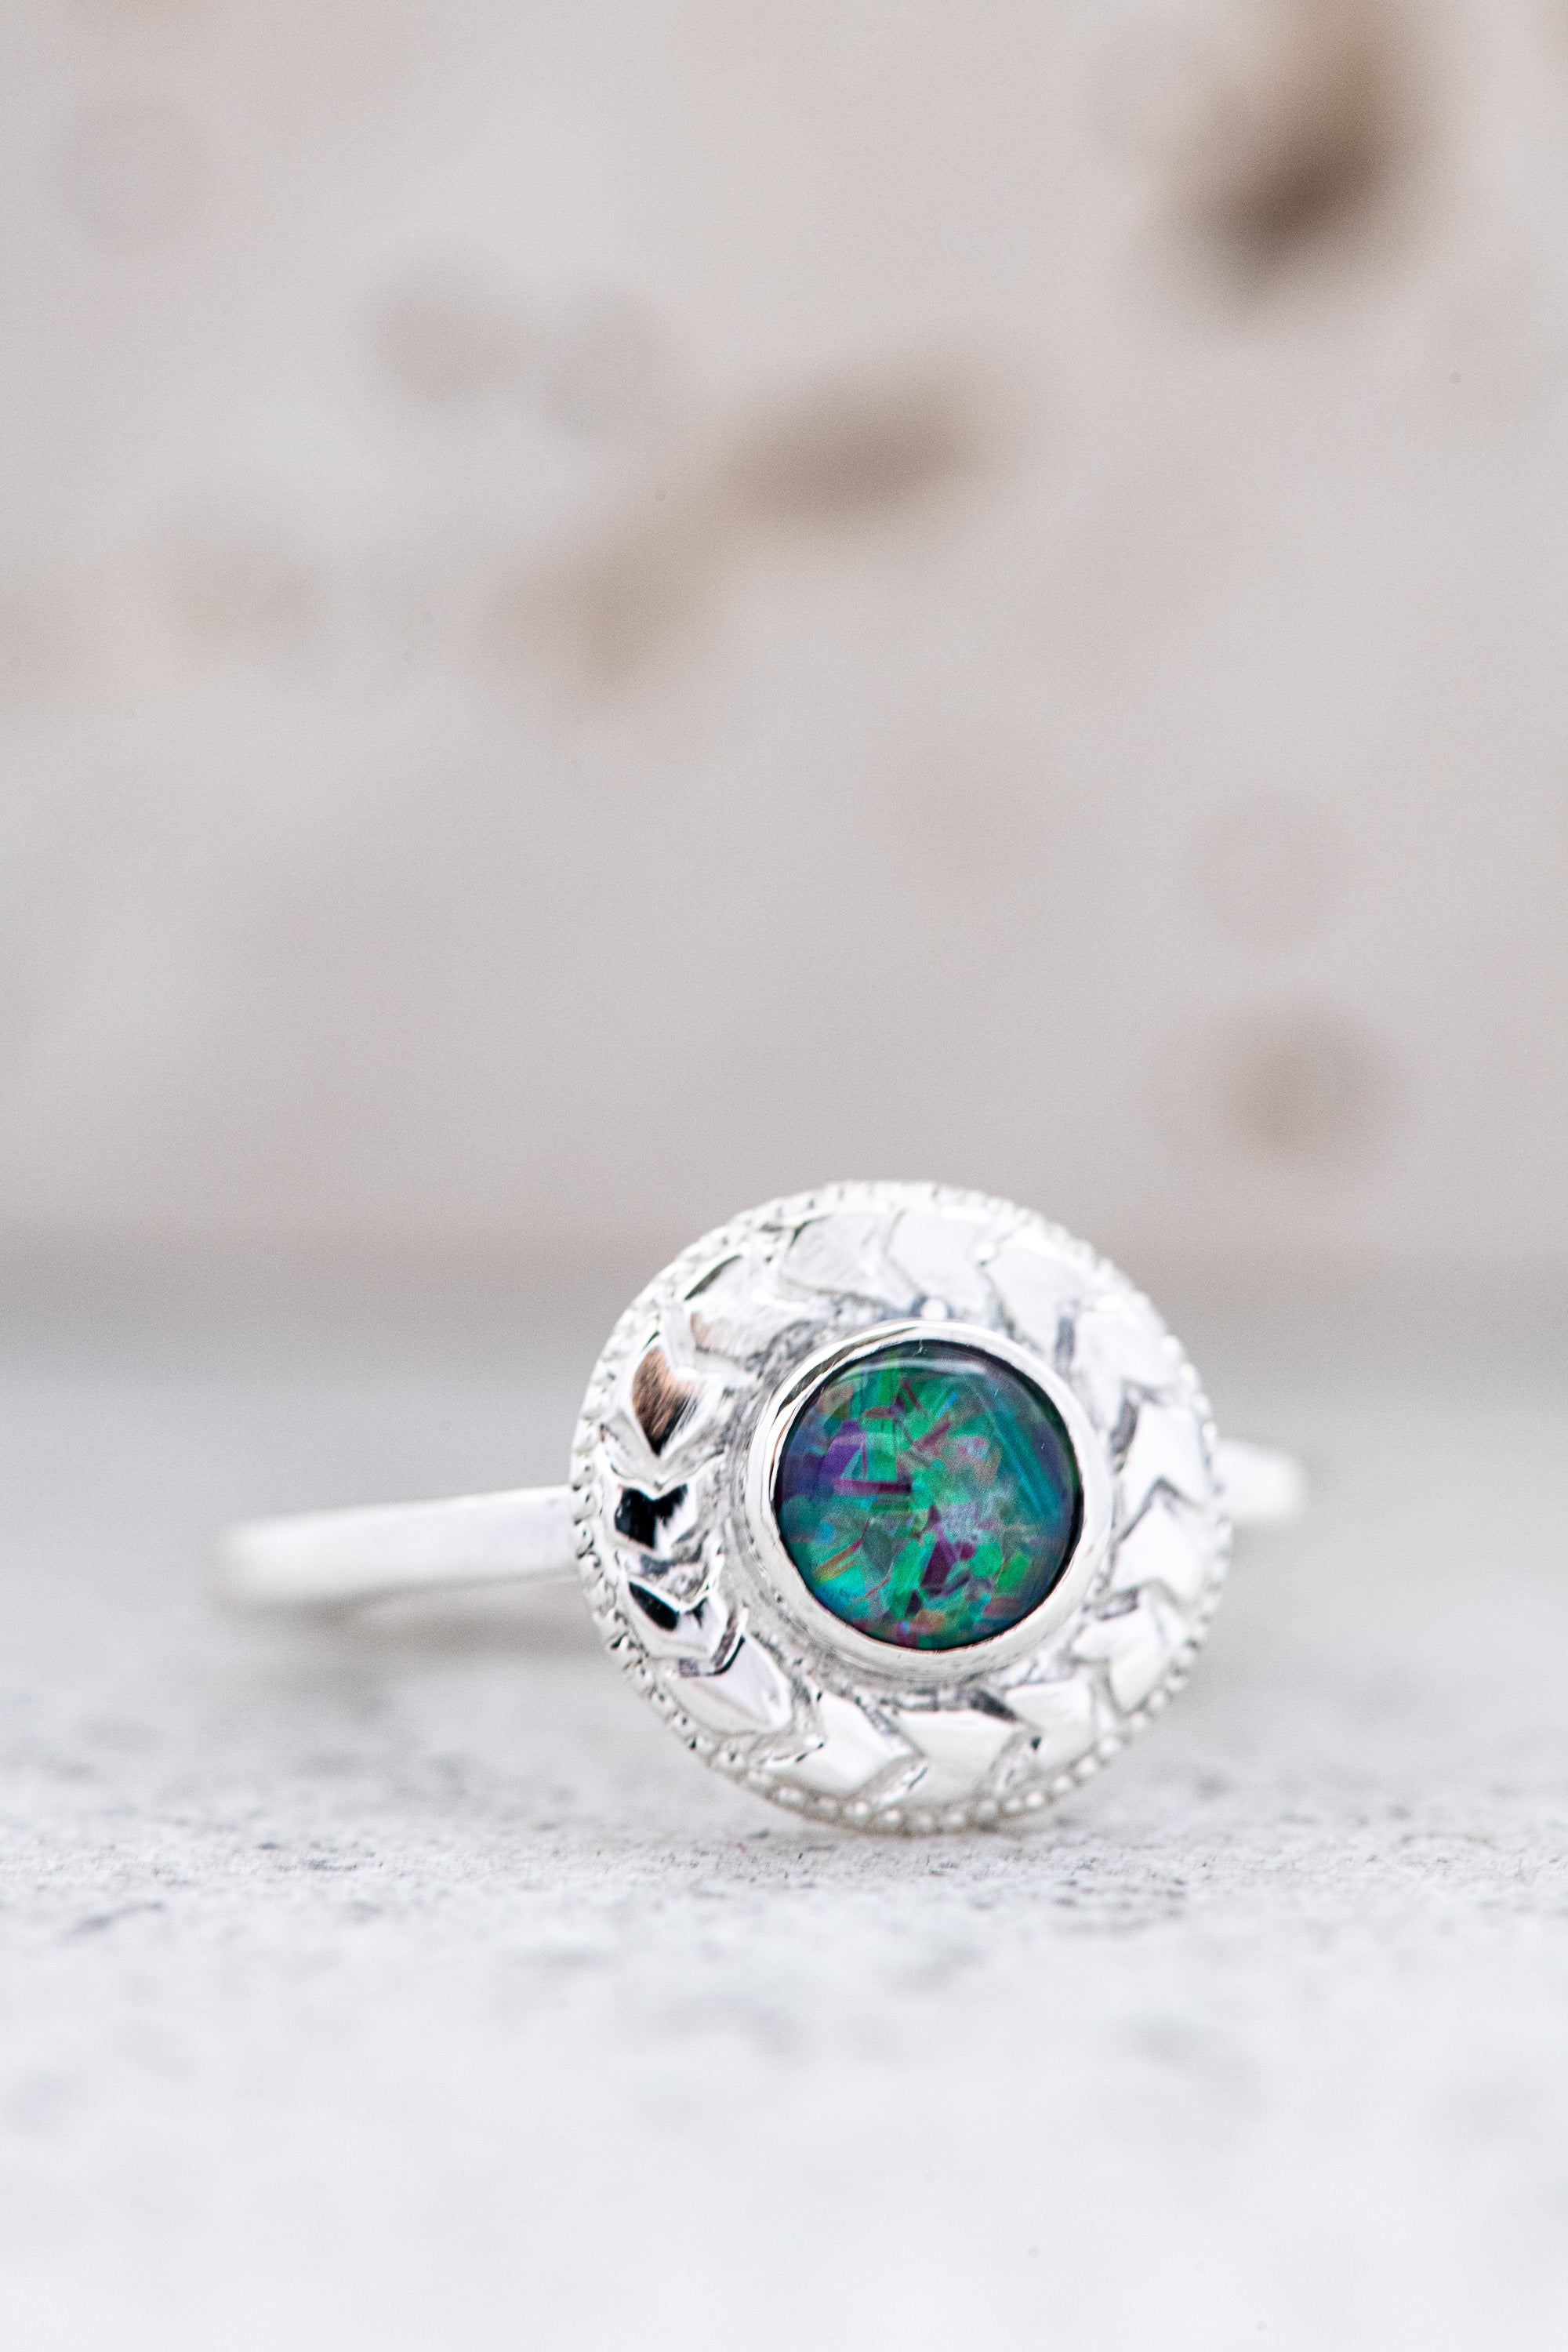 Fire Opal Ring in 925 Sterling Silver Gemstone Jewelry Ring Size 6 7 8 9 |  eBay